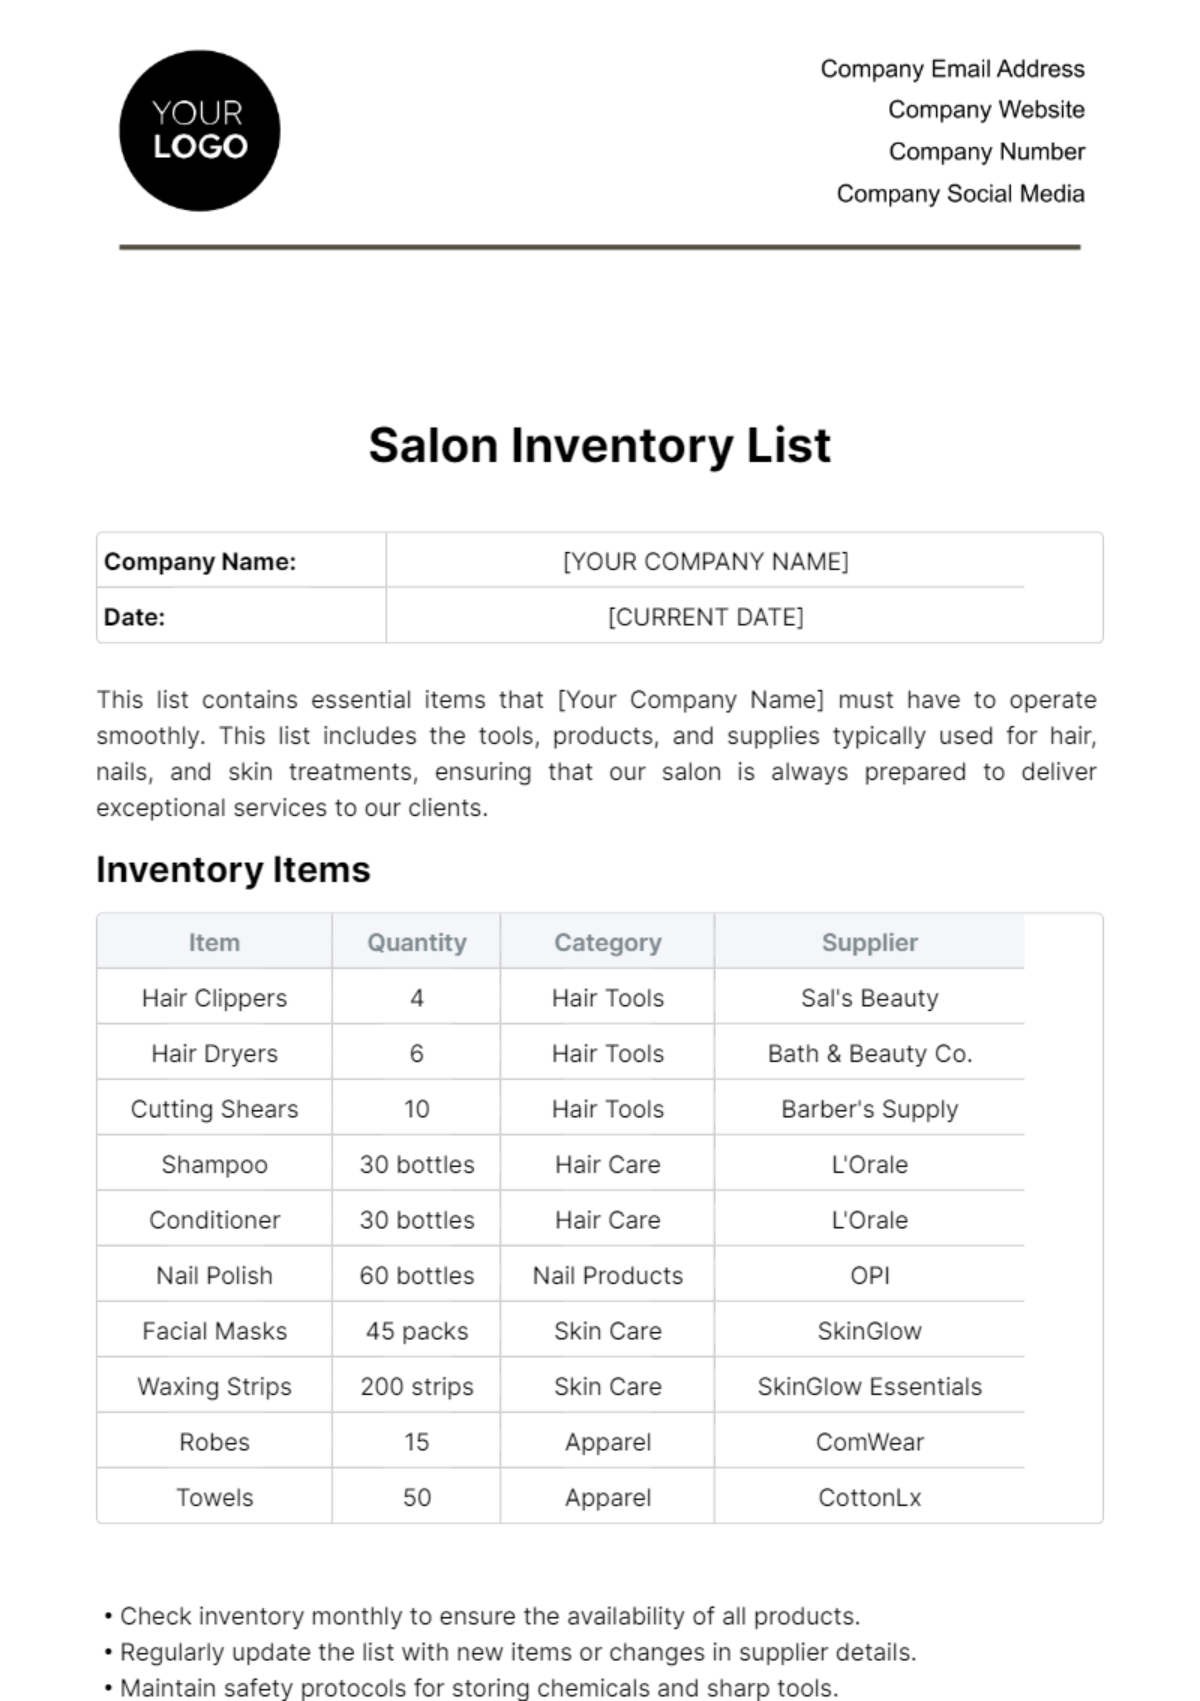 Free Salon Inventory List Template